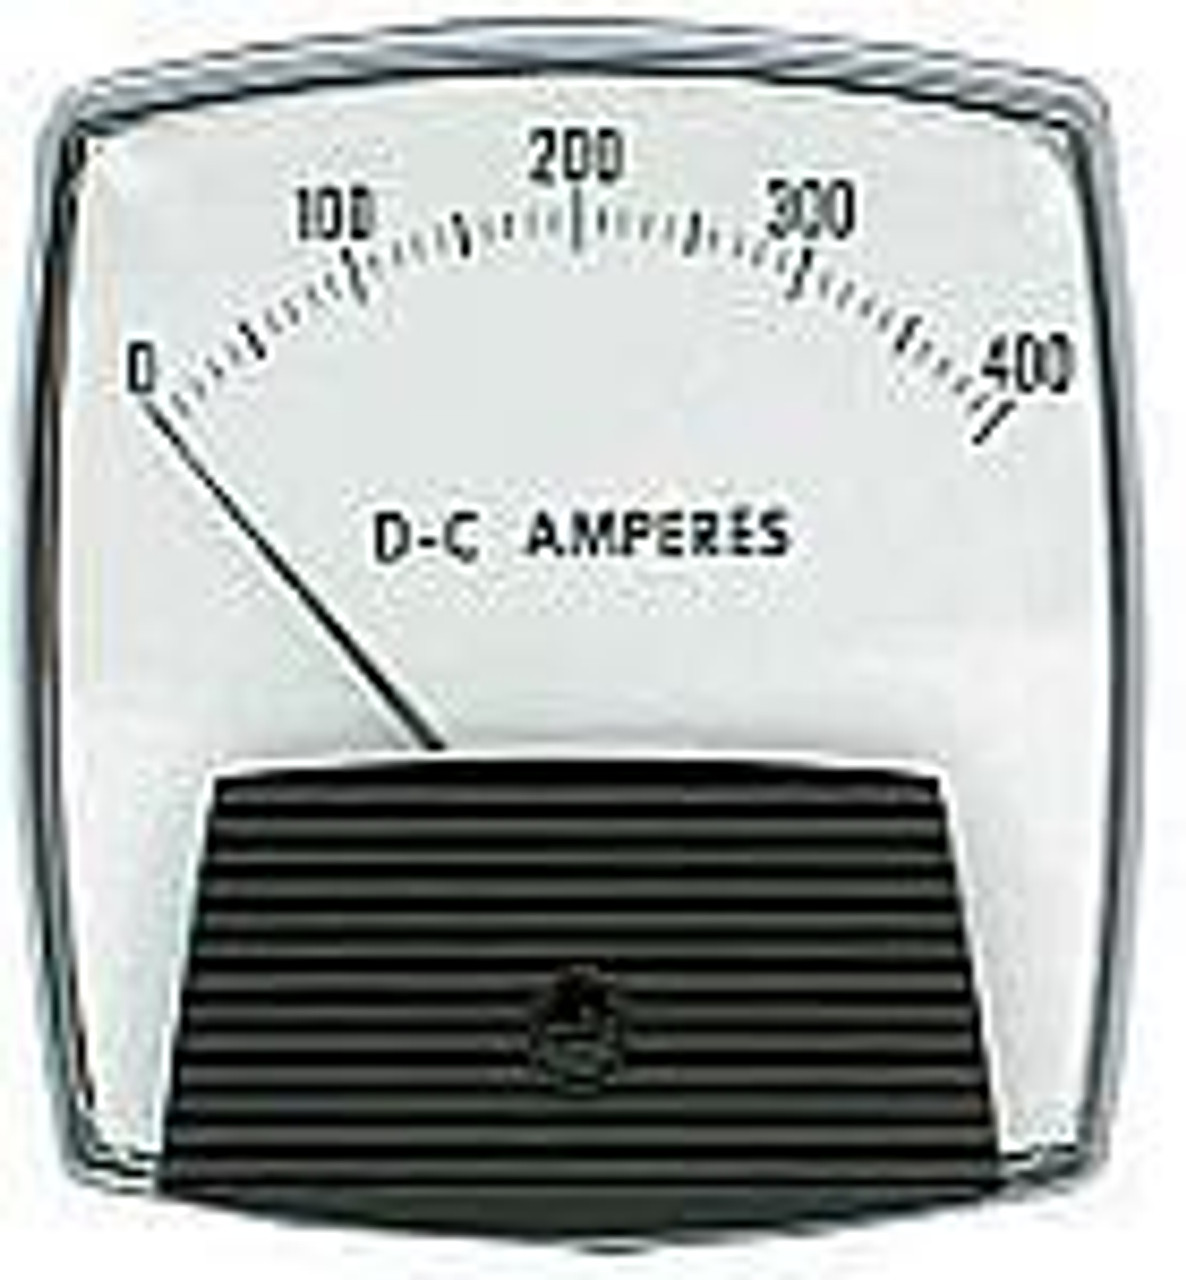 Analog Voltmeter Meter - AC Pointer Voltmeter 0-500V Scale Range